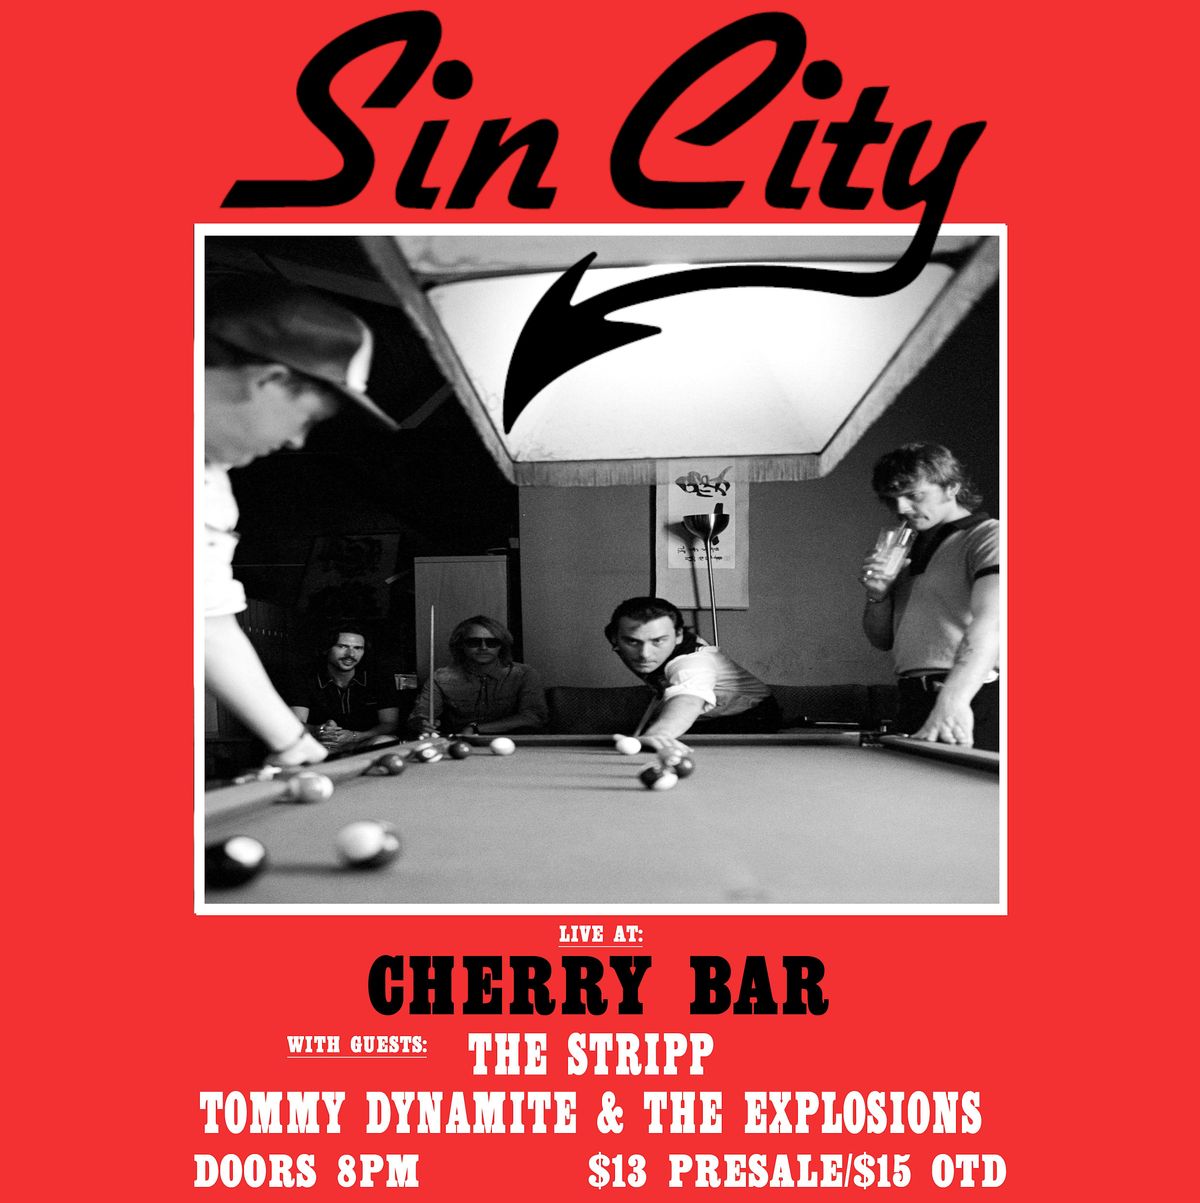 Sin City live at Cherry Bar, FRI JULY 12